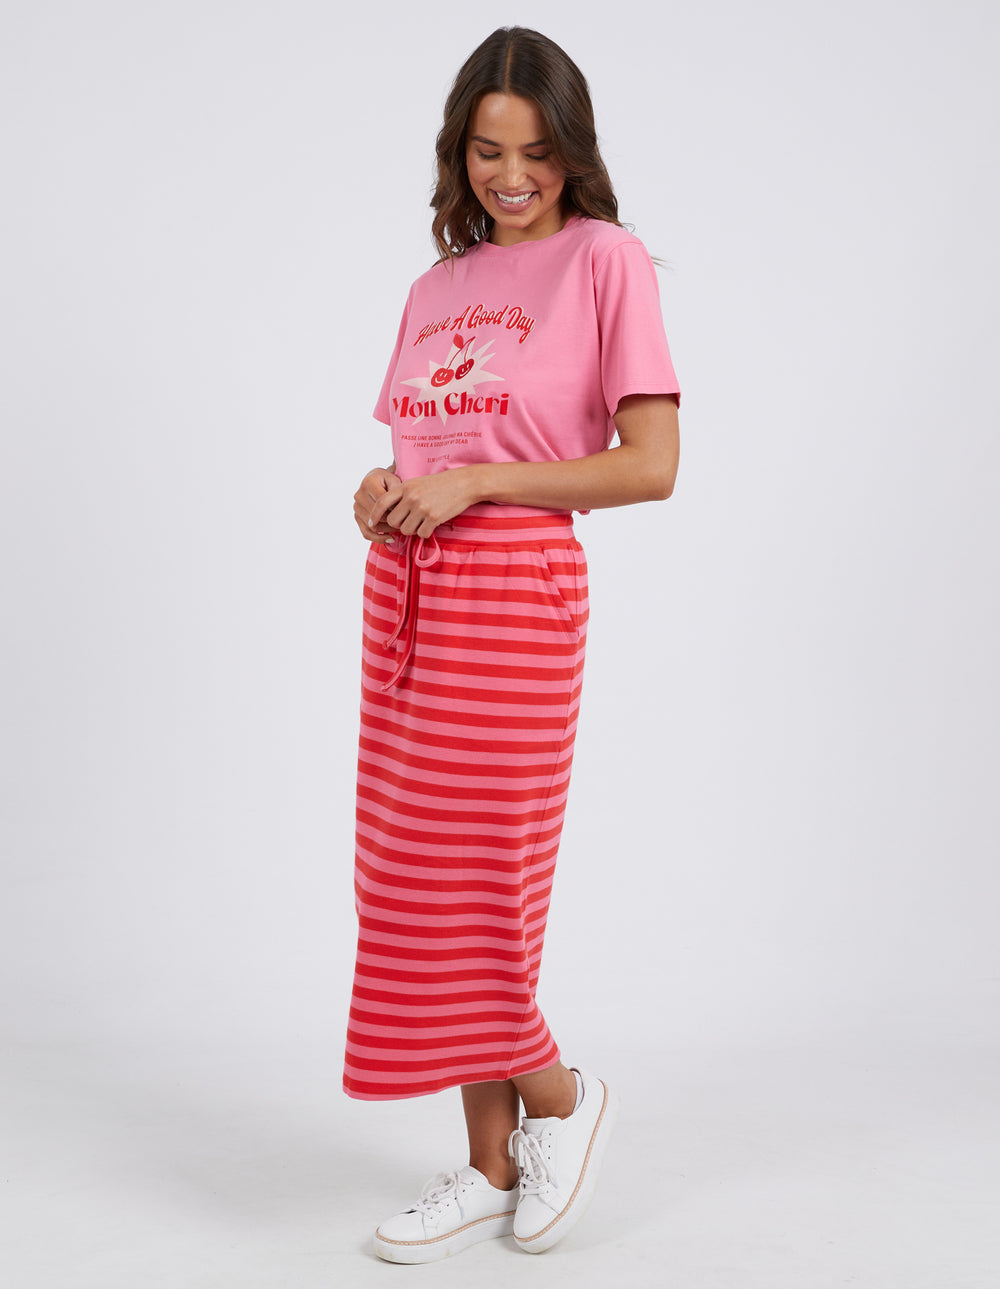 Elm - Sunset Stripe Skirt - Cherry & Peach Stripe